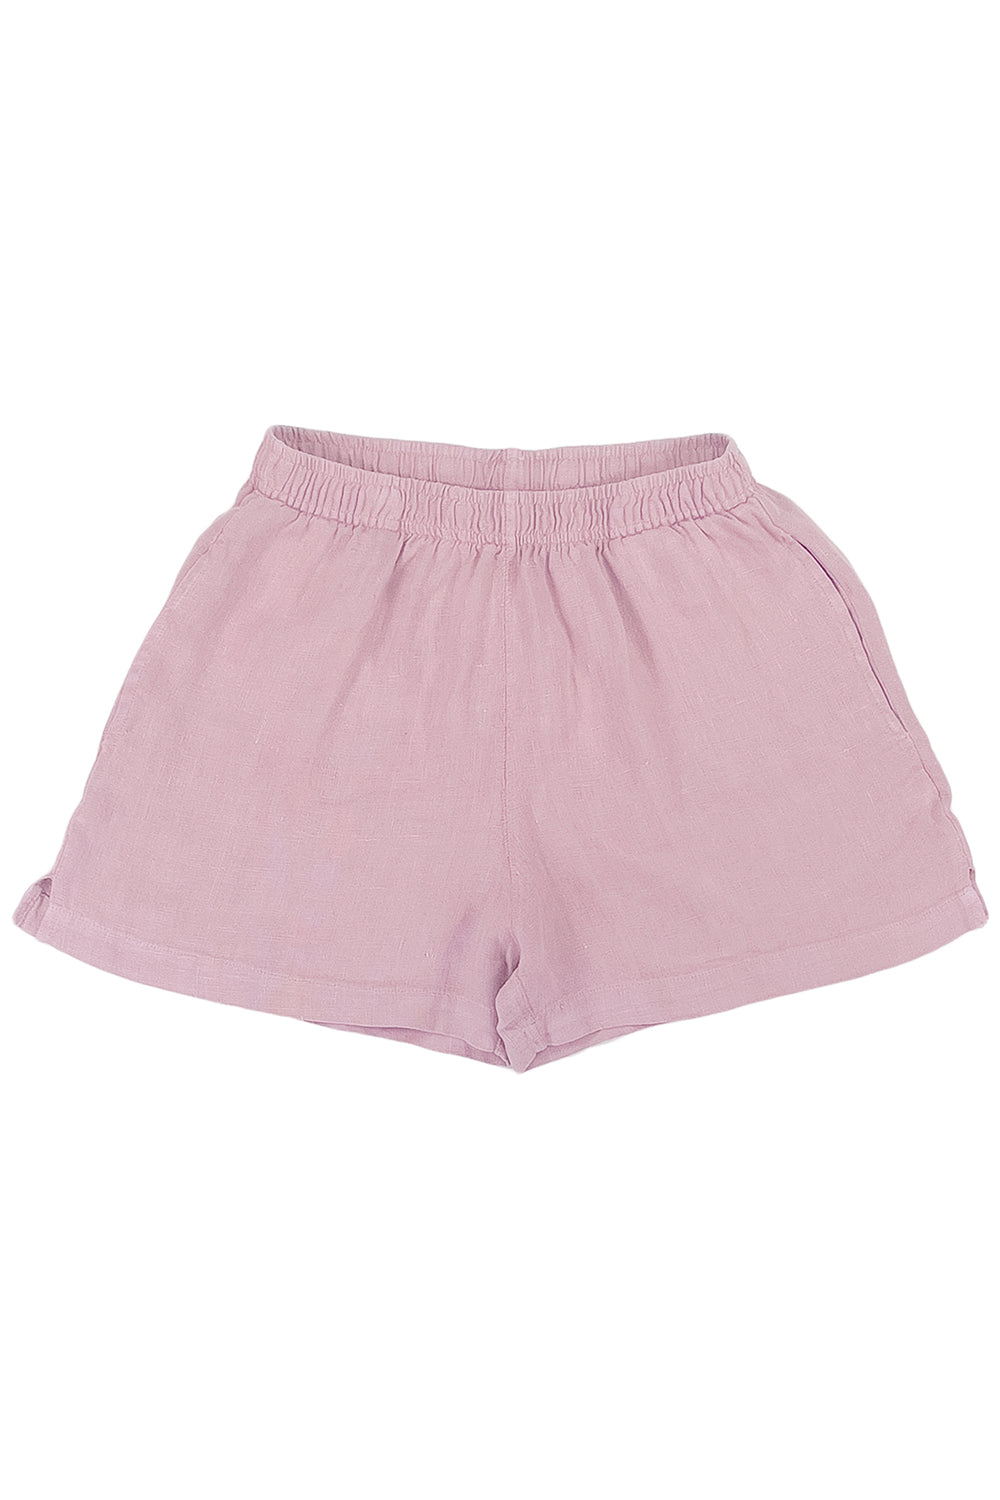 Makena 100% Hemp Short | Jungmaven Hemp Clothing & Accessories / Color: Rose Quartz